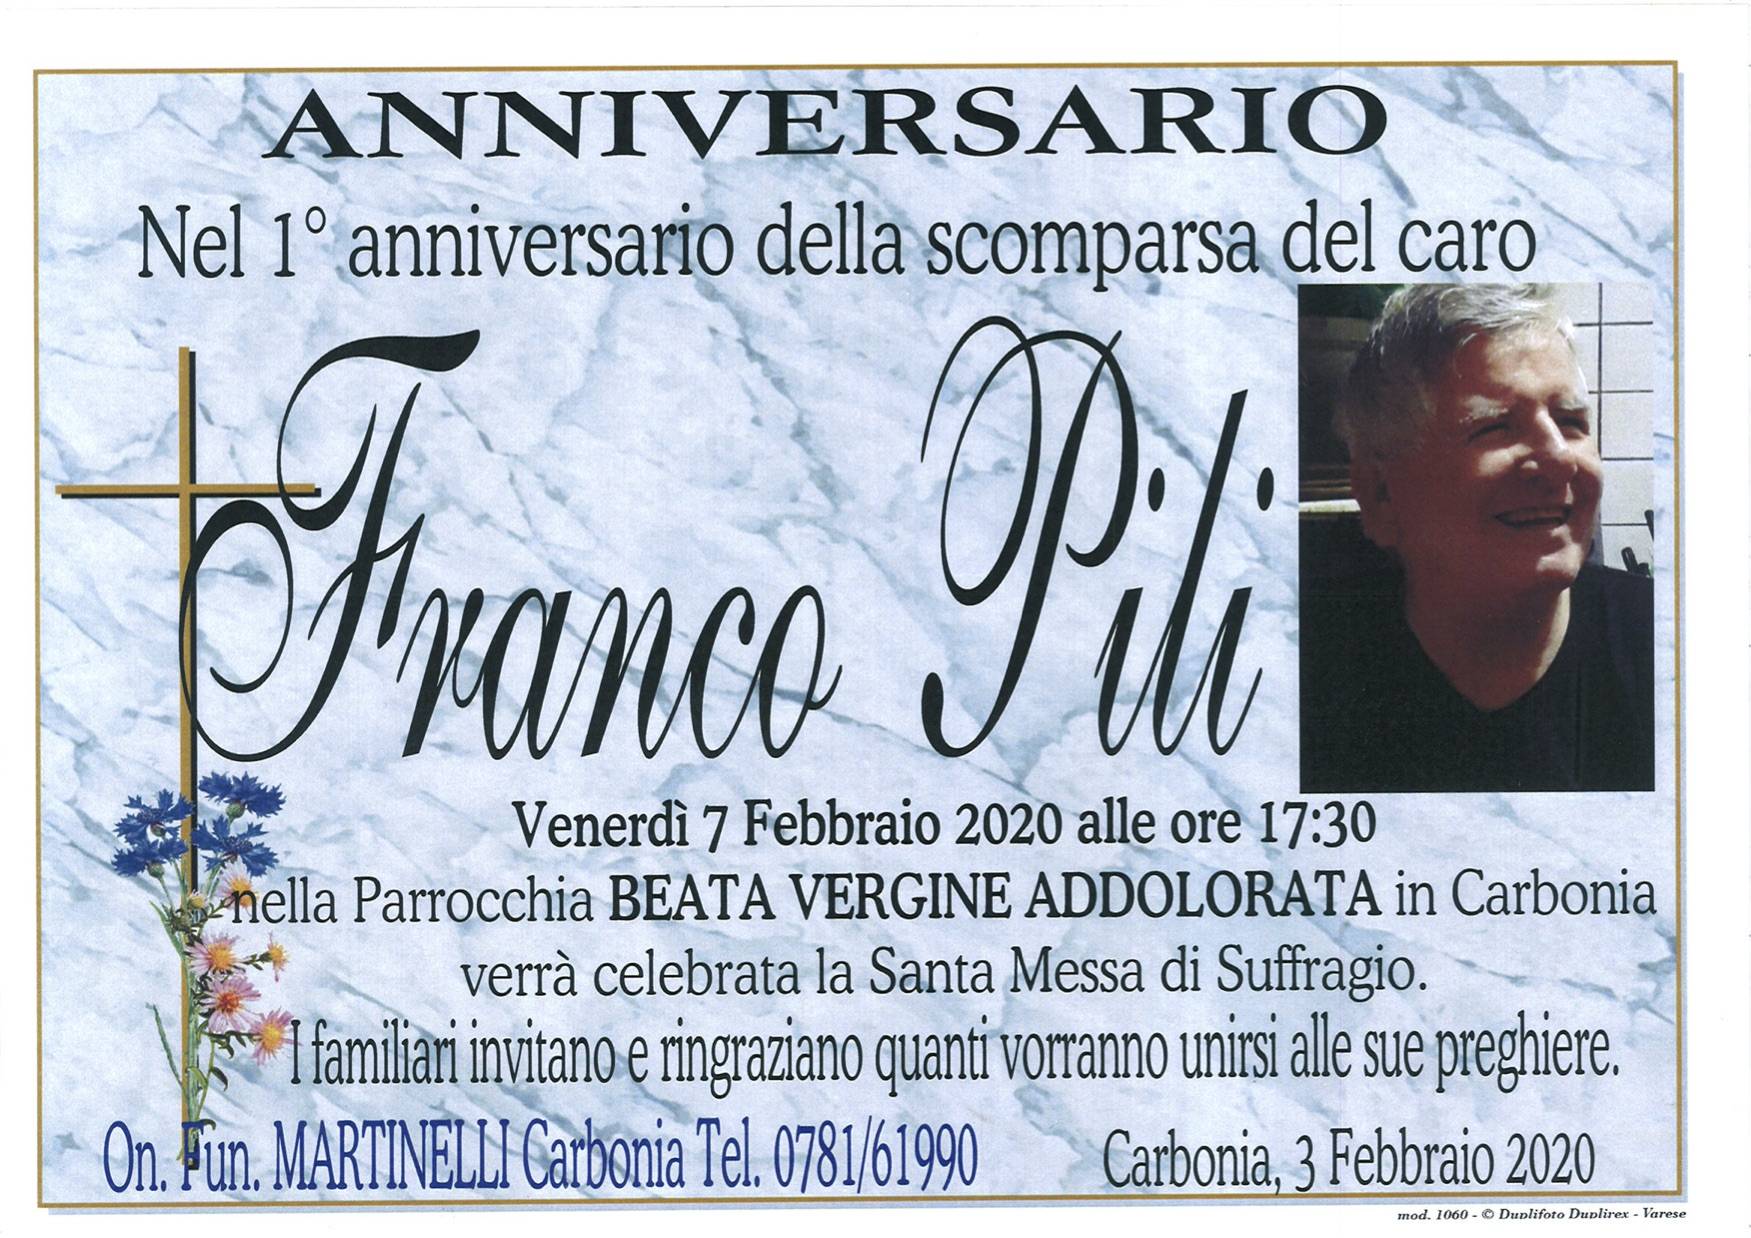 Franco Pili